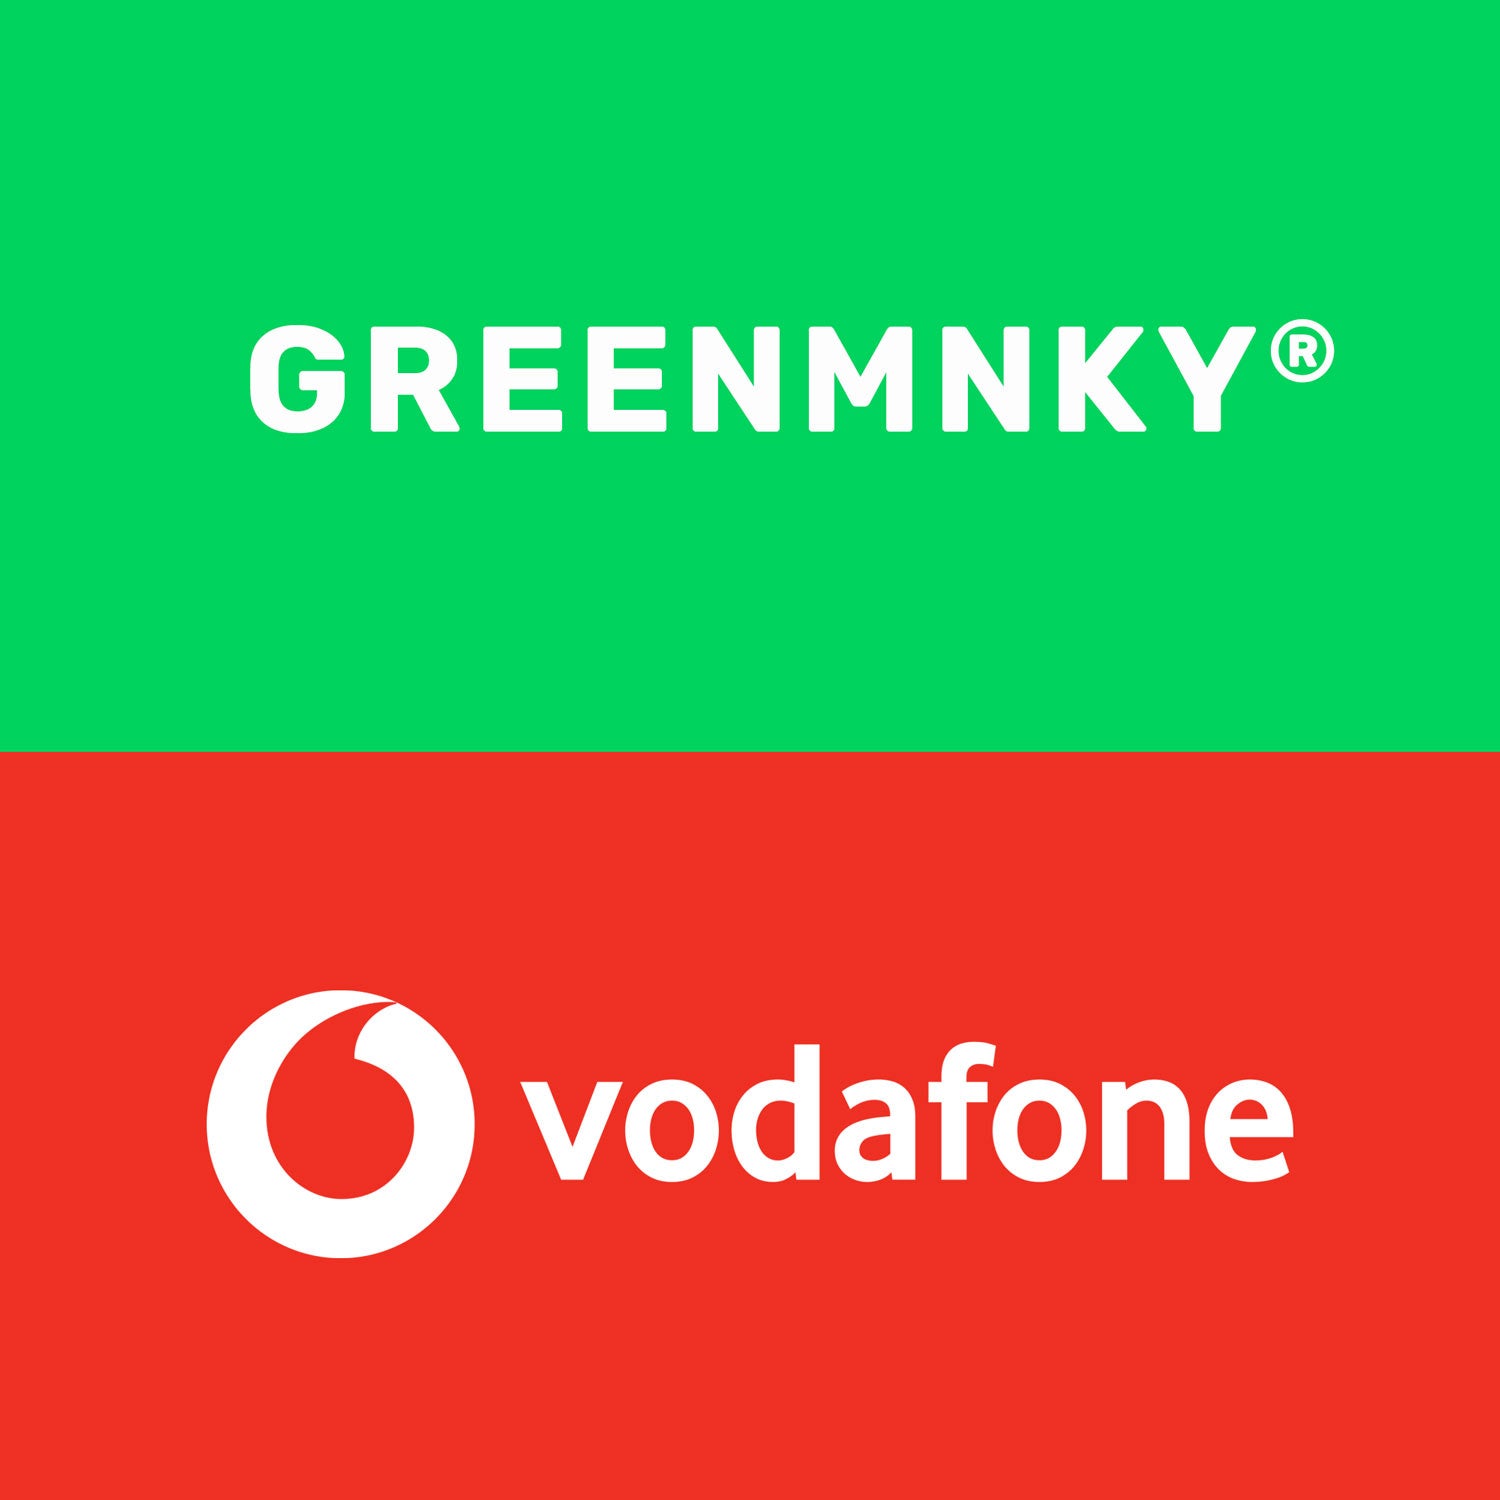 Greenmnky & Vodafone